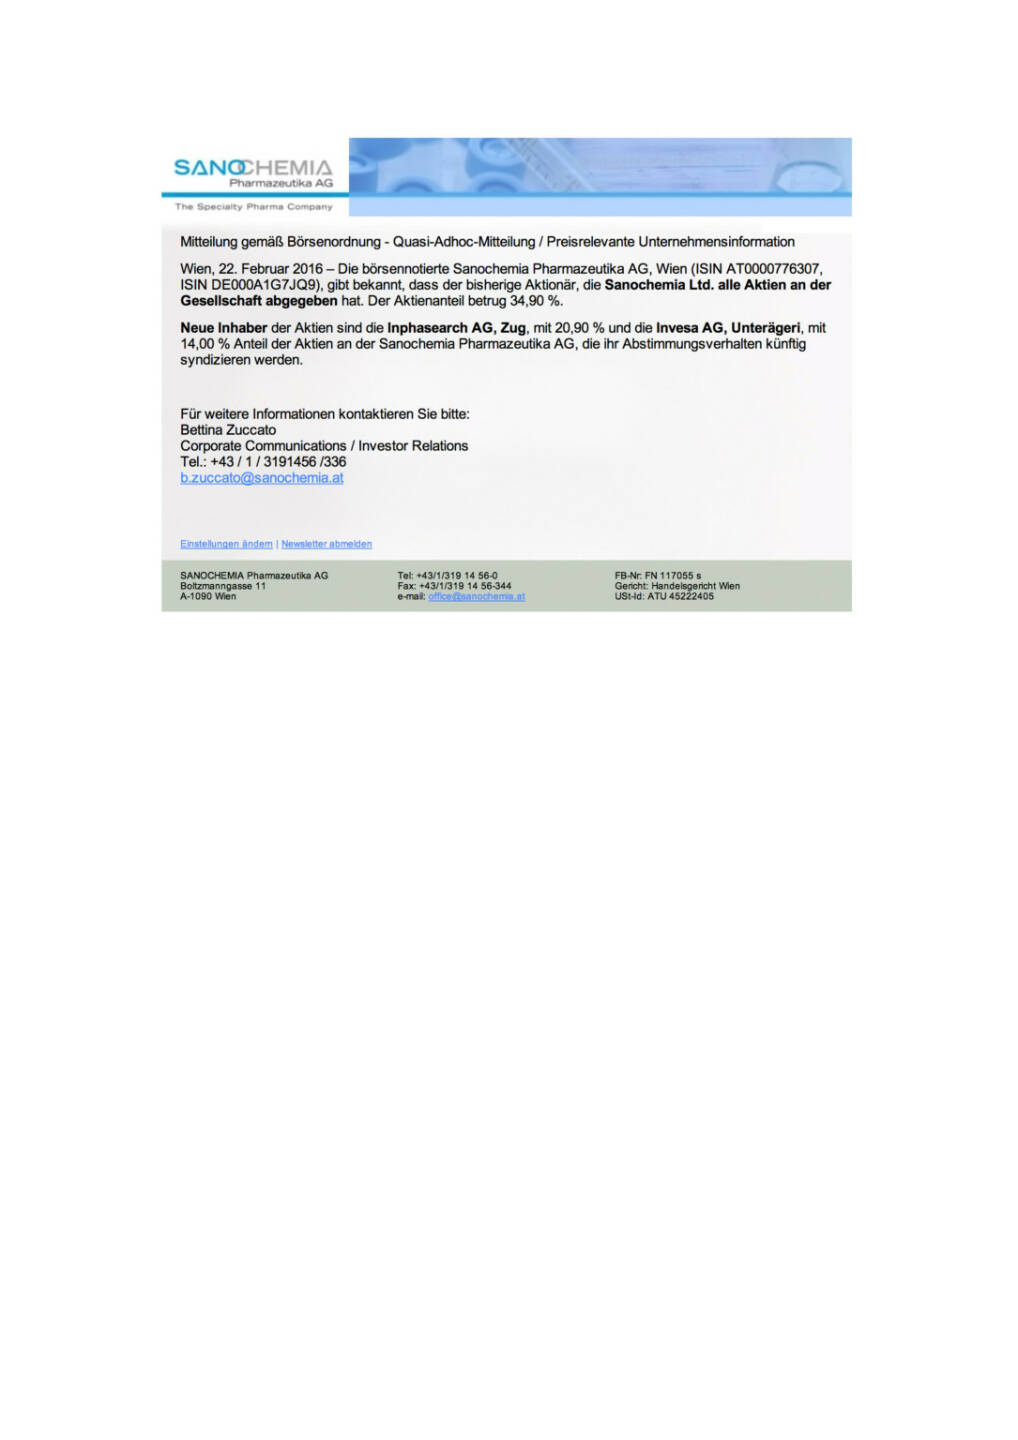 Sanochemia: neue Aktieninhaber, Seite 1/1, komplettes Dokument unter http://boerse-social.com/static/uploads/file_666_sanochemia_neue_aktieninhaber.pdf